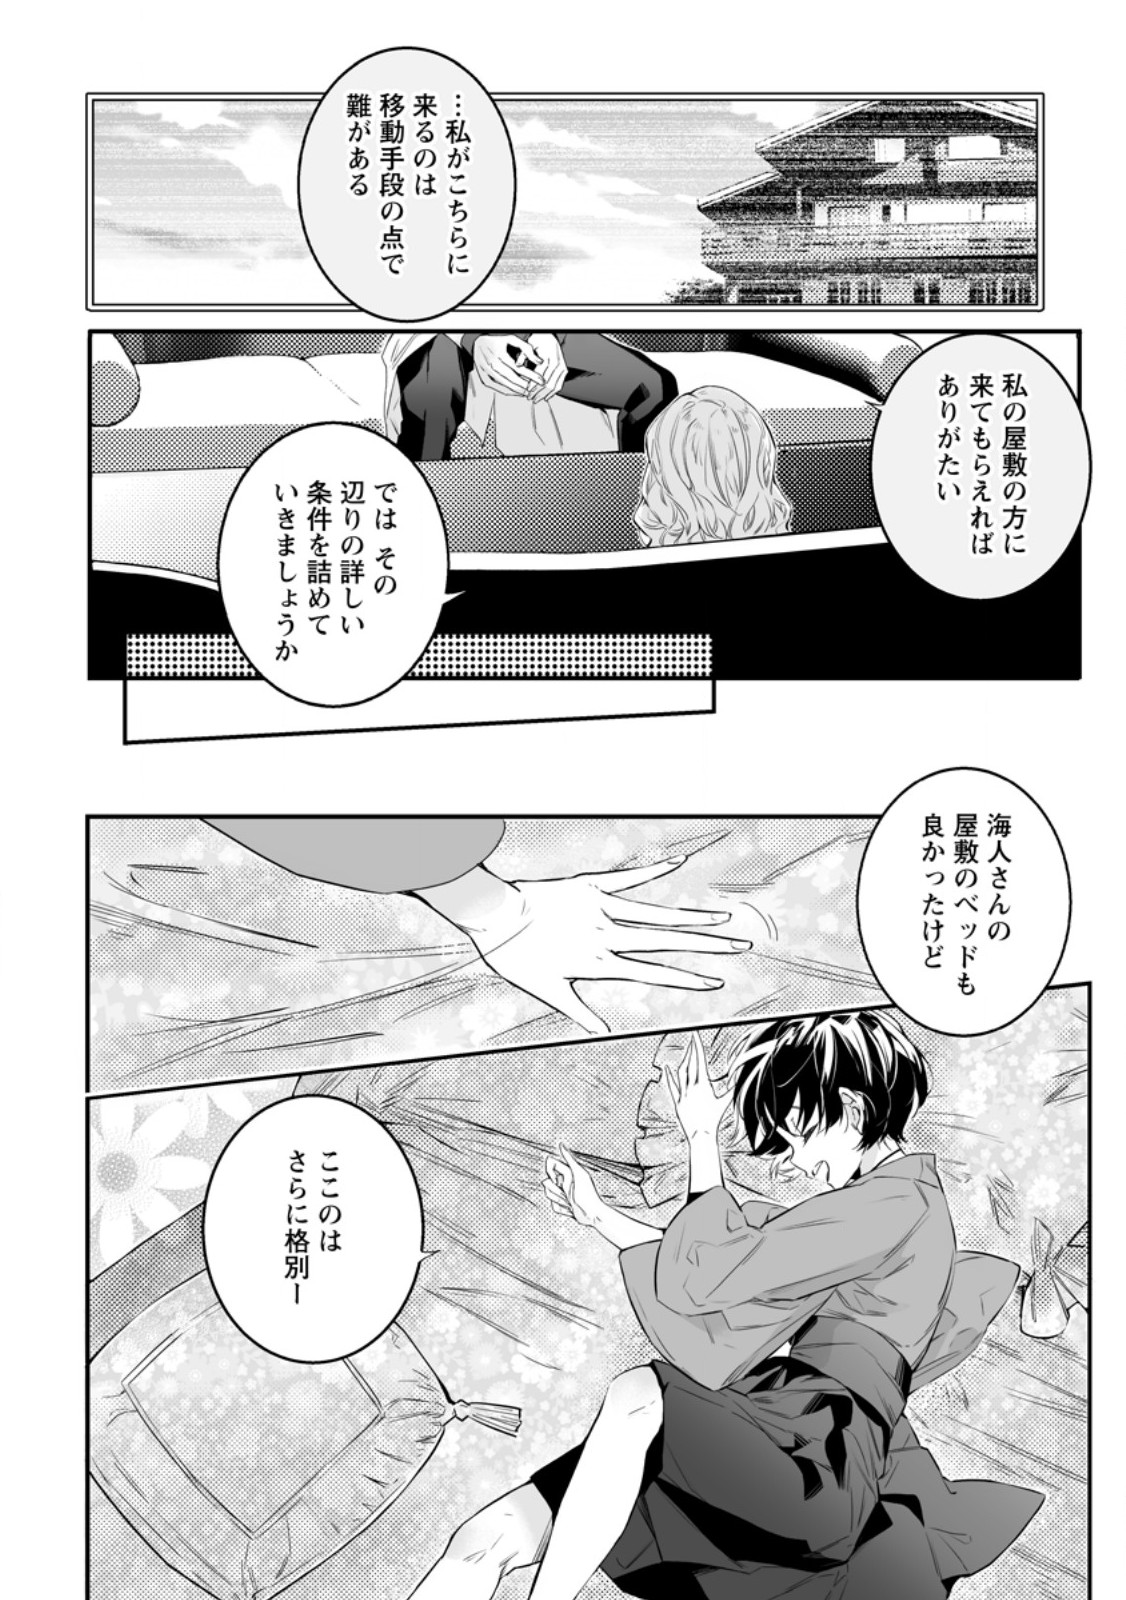 Hakui no Eiyuu - Chapter 34.1 - Page 4